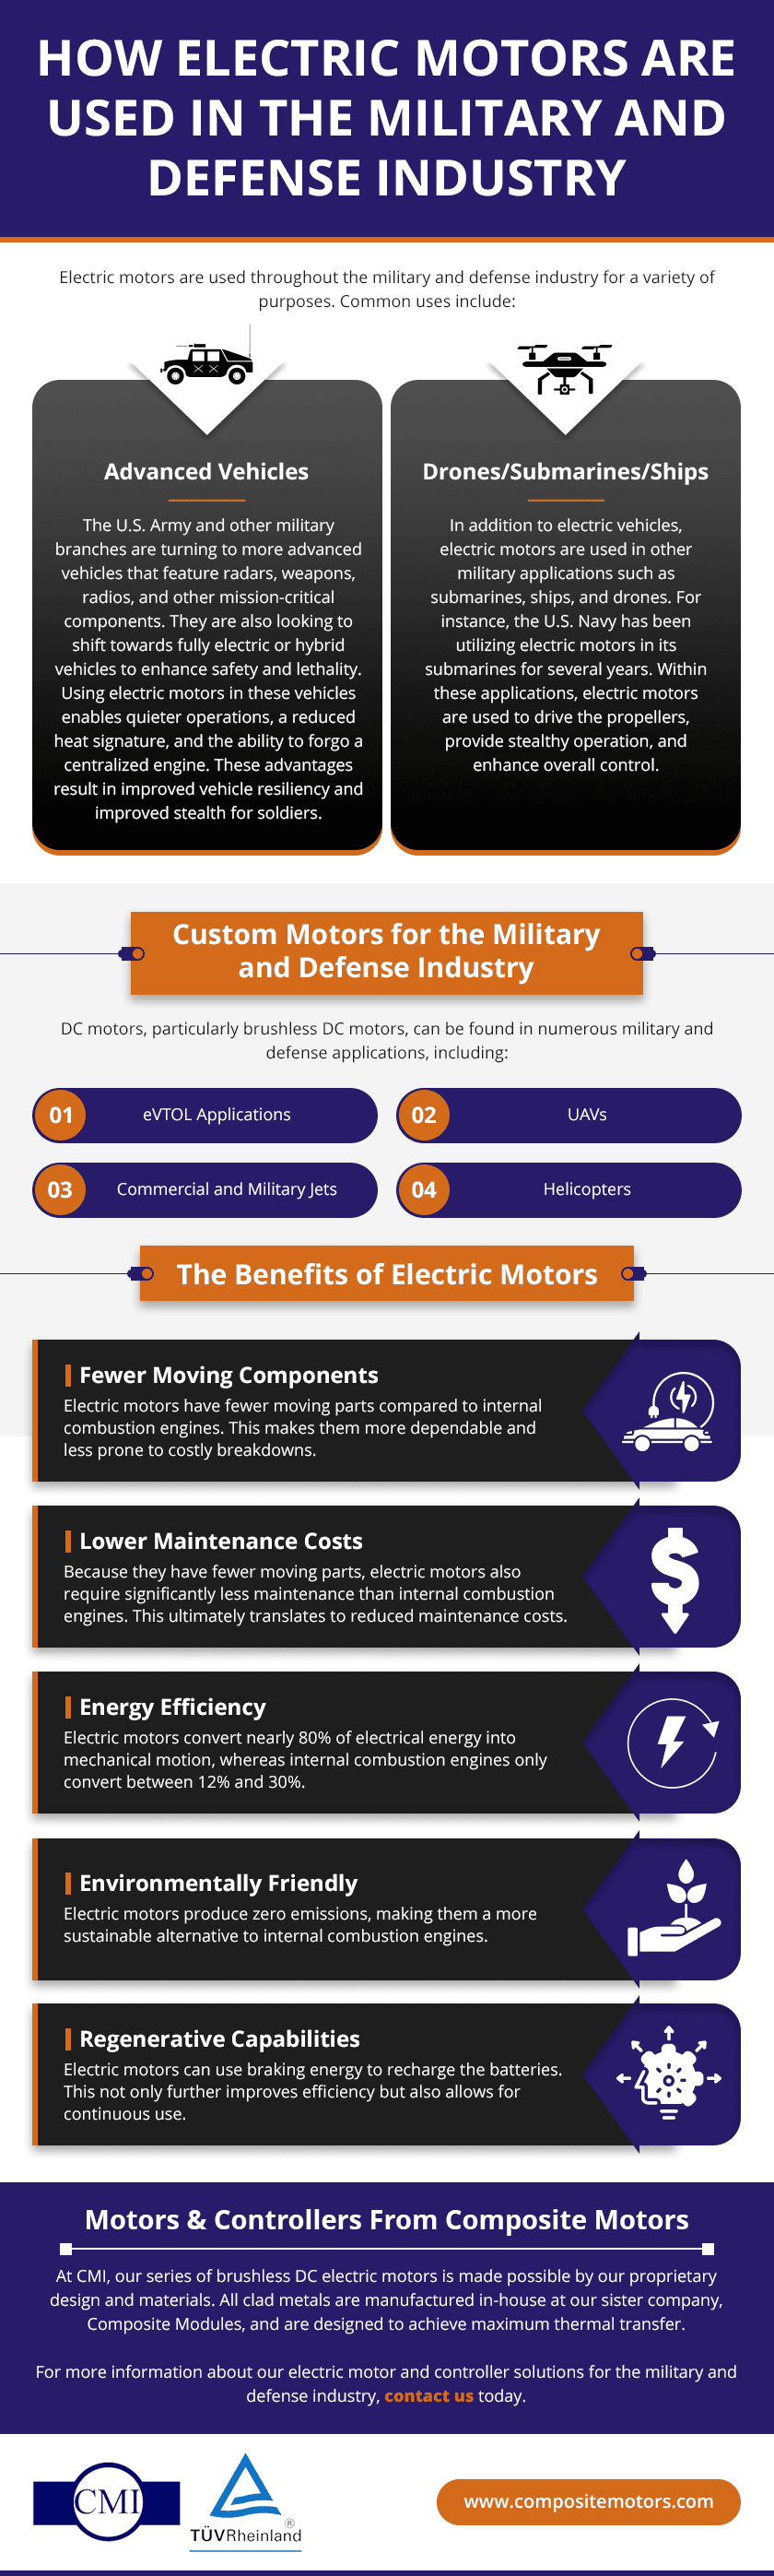 Motors for Defense Industry